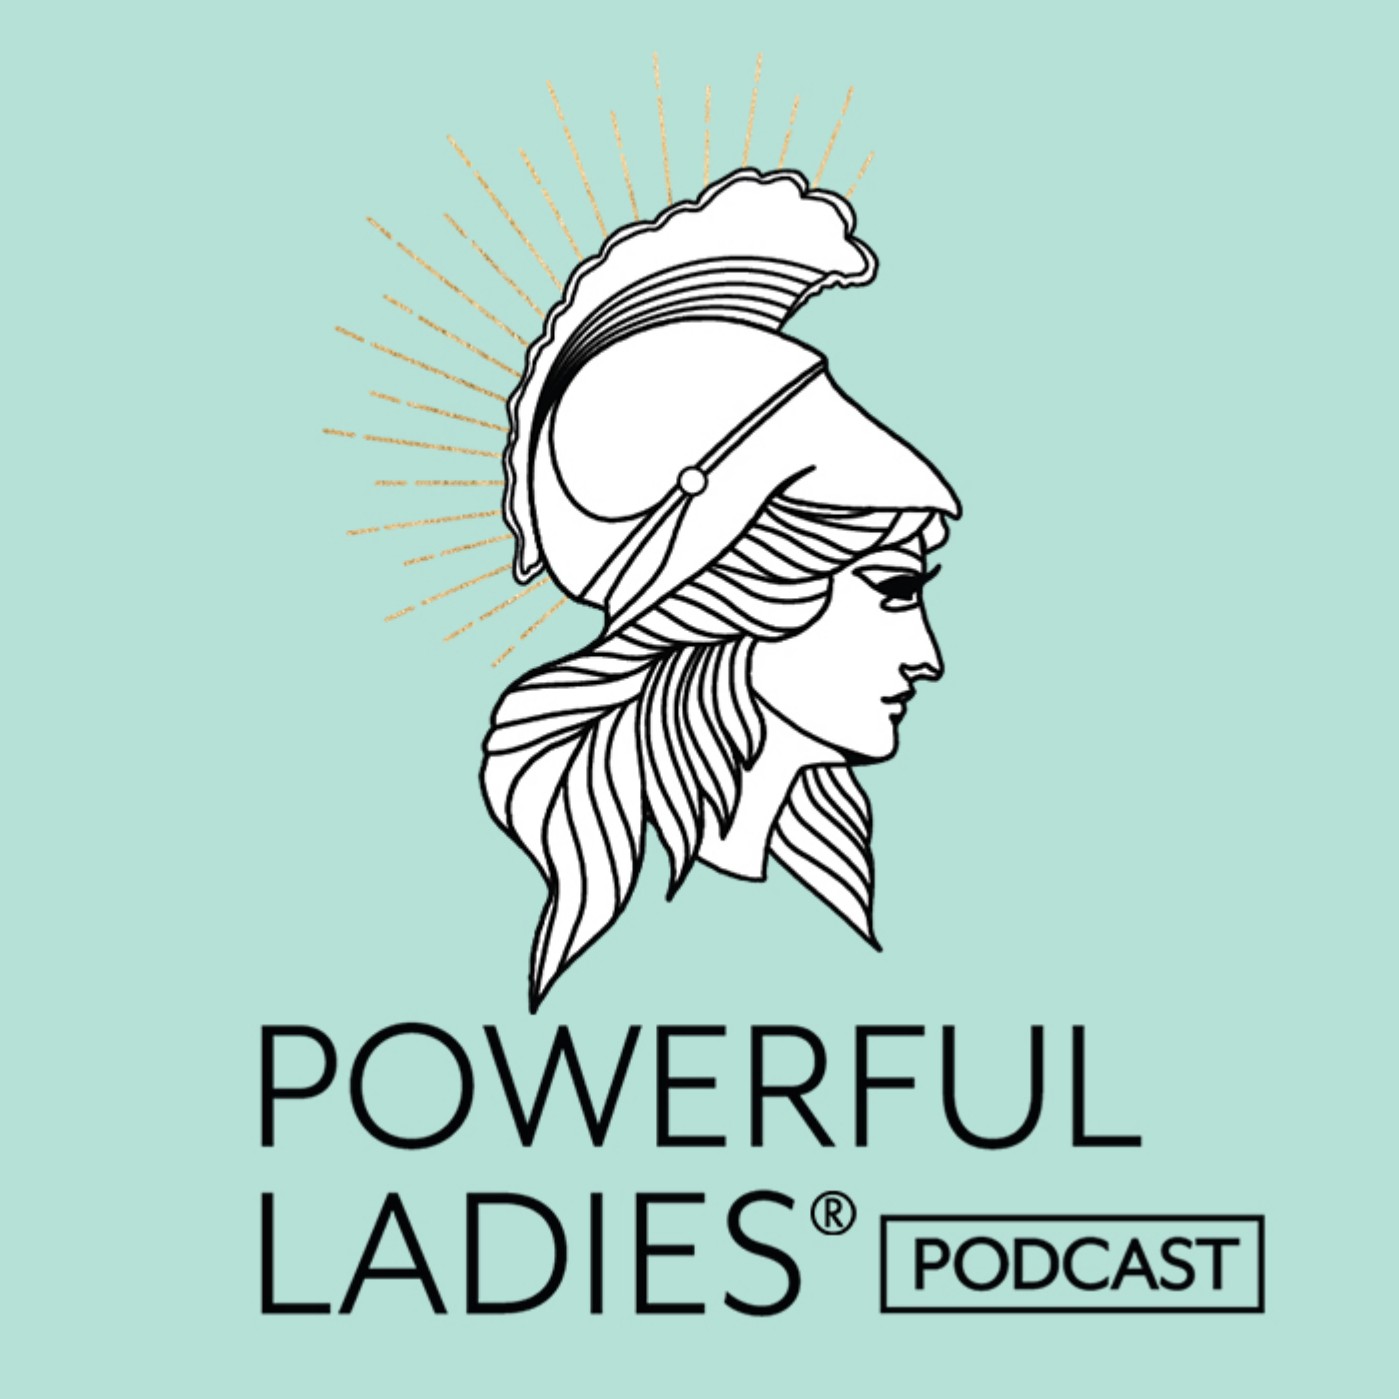 Powerful Ladies® Podcast